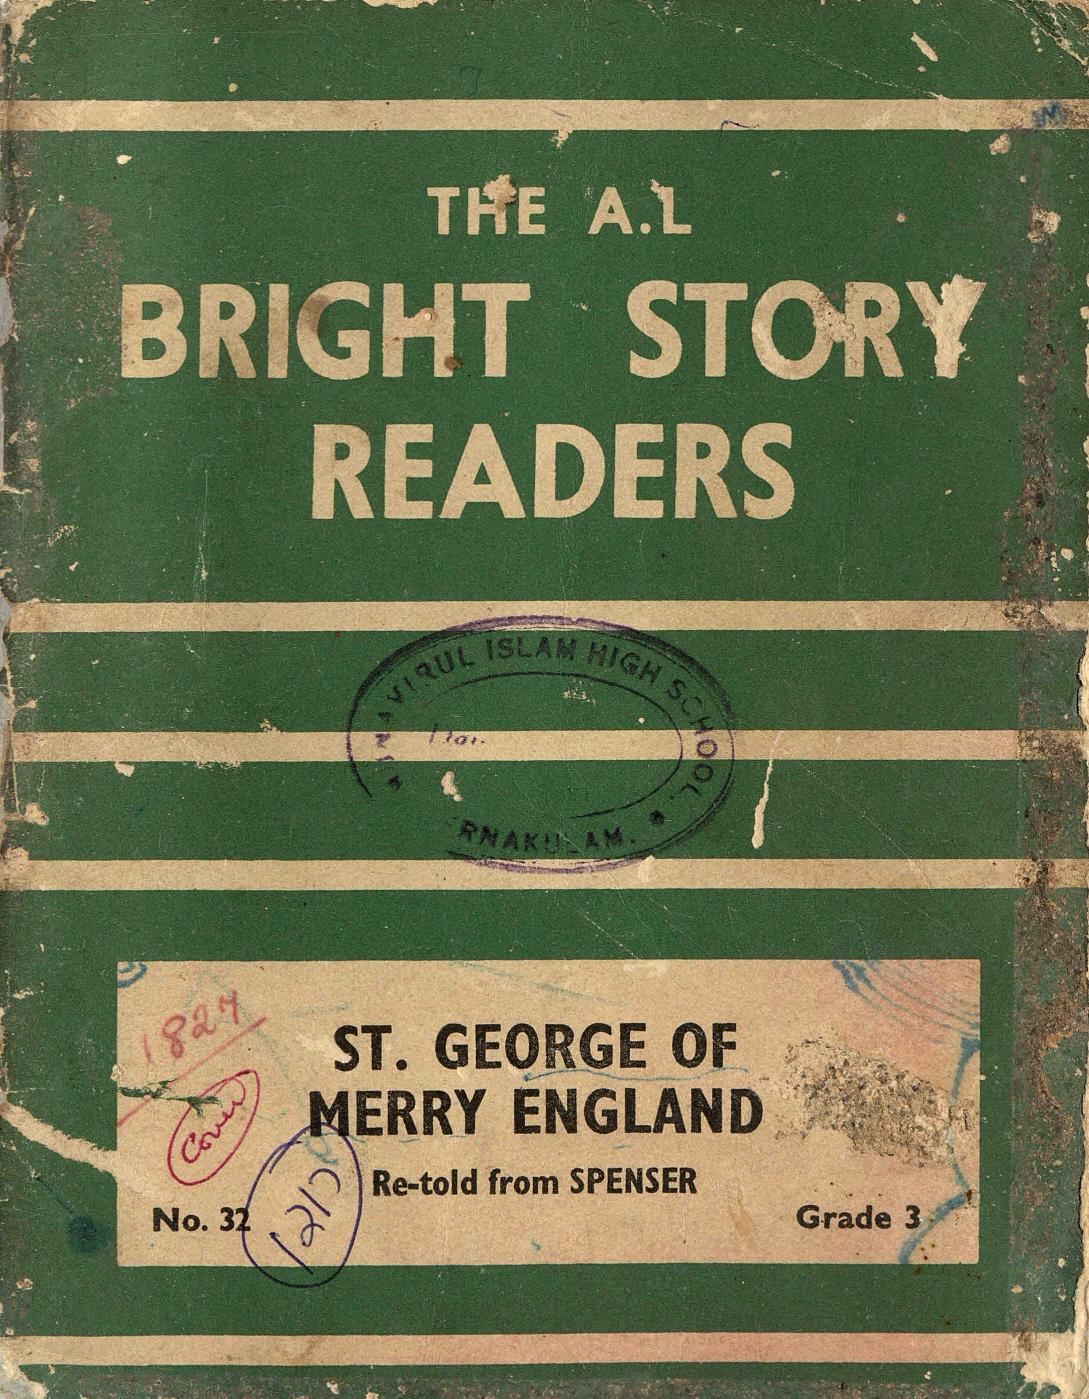  St. George of Merry England - Spenser